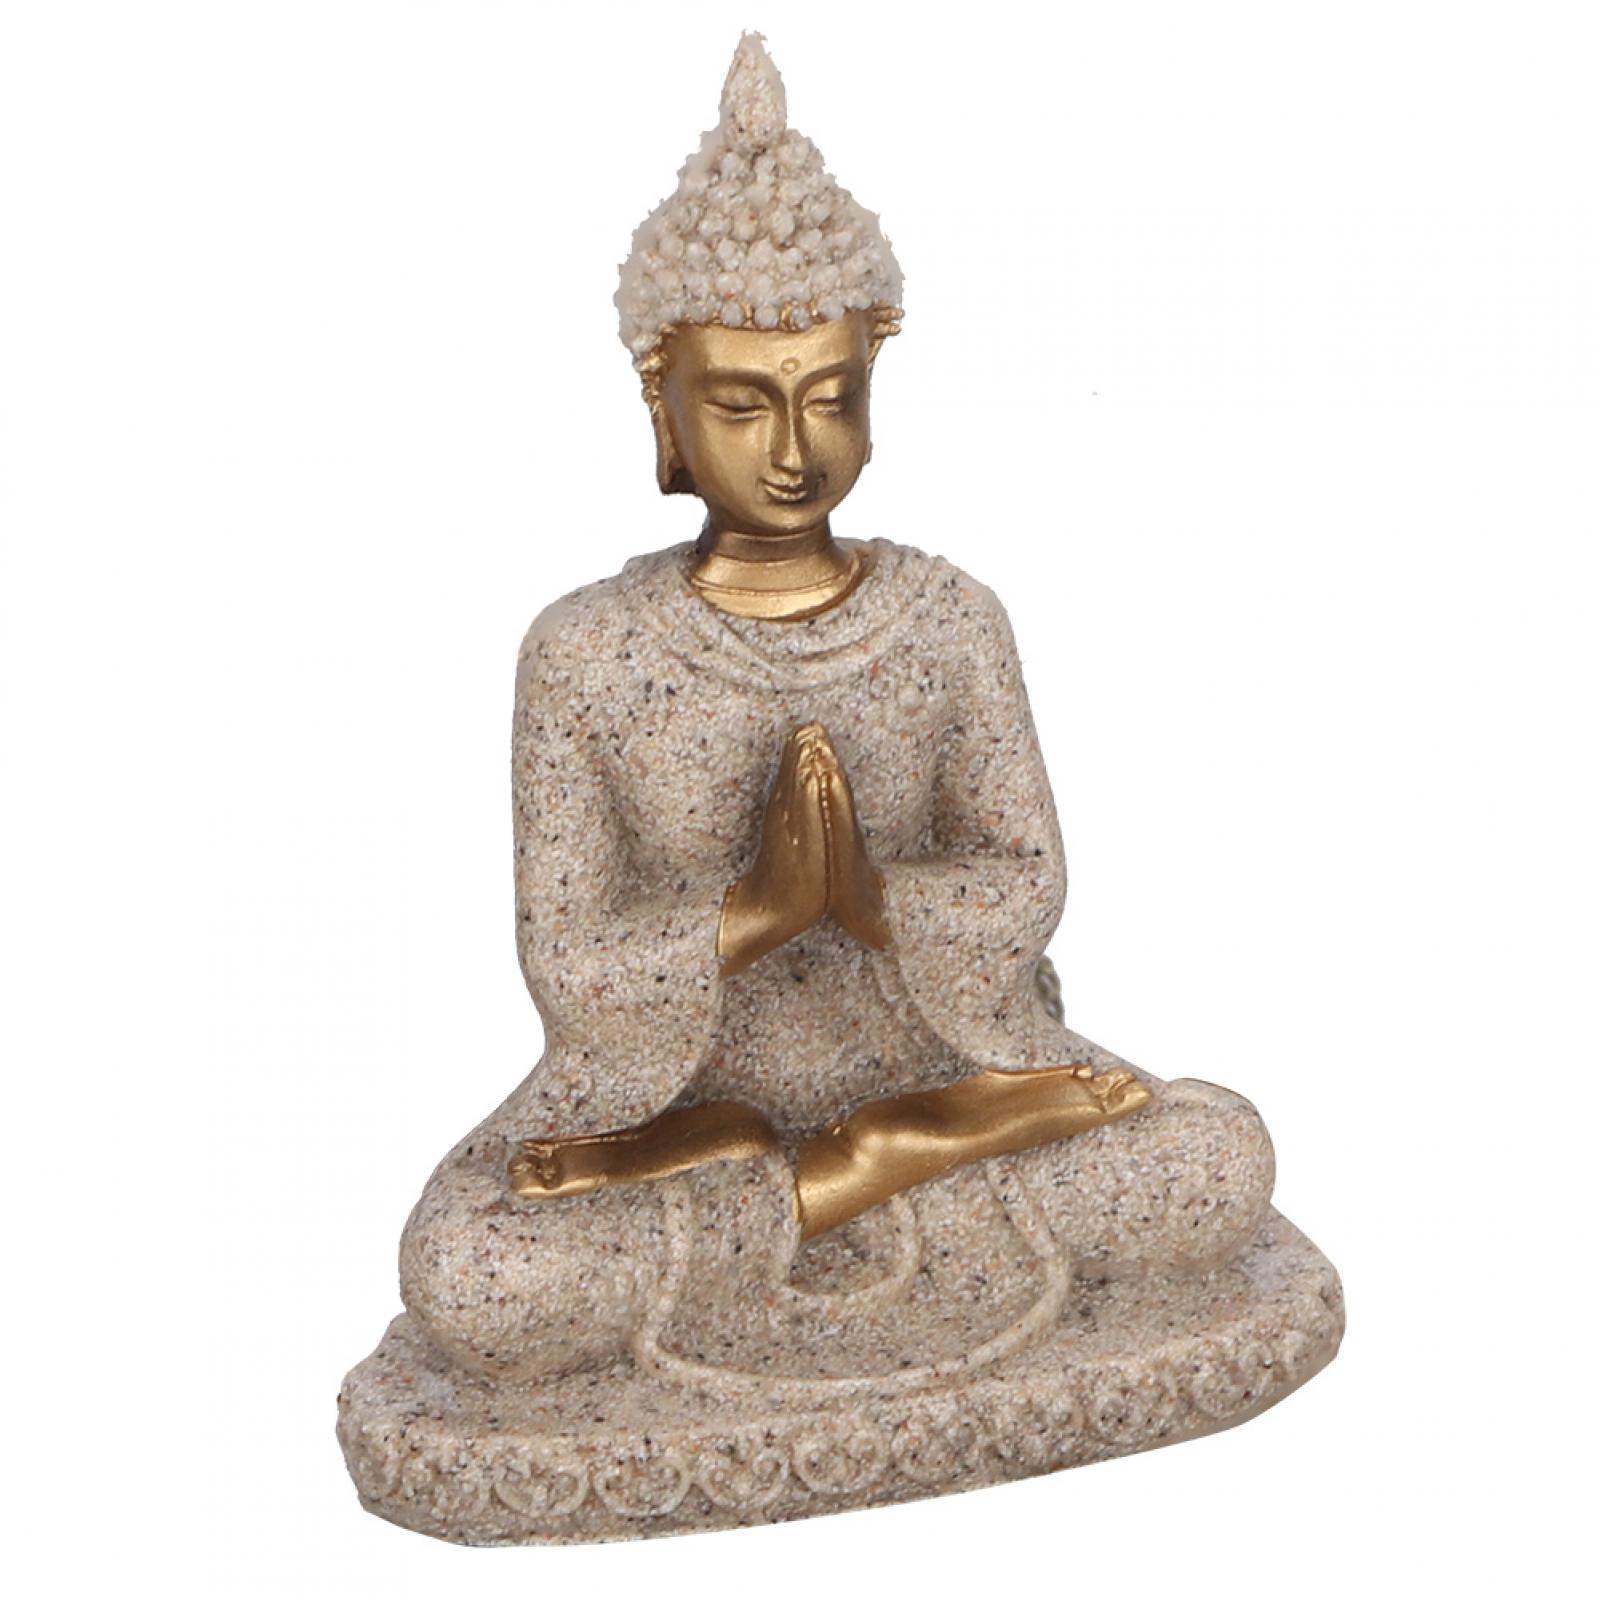 Meditating Seated Buddha Statue Carving Figurine Craft for Home Decoration Ornament, Buddha Figurine,Buddha Statue - image 3 of 8